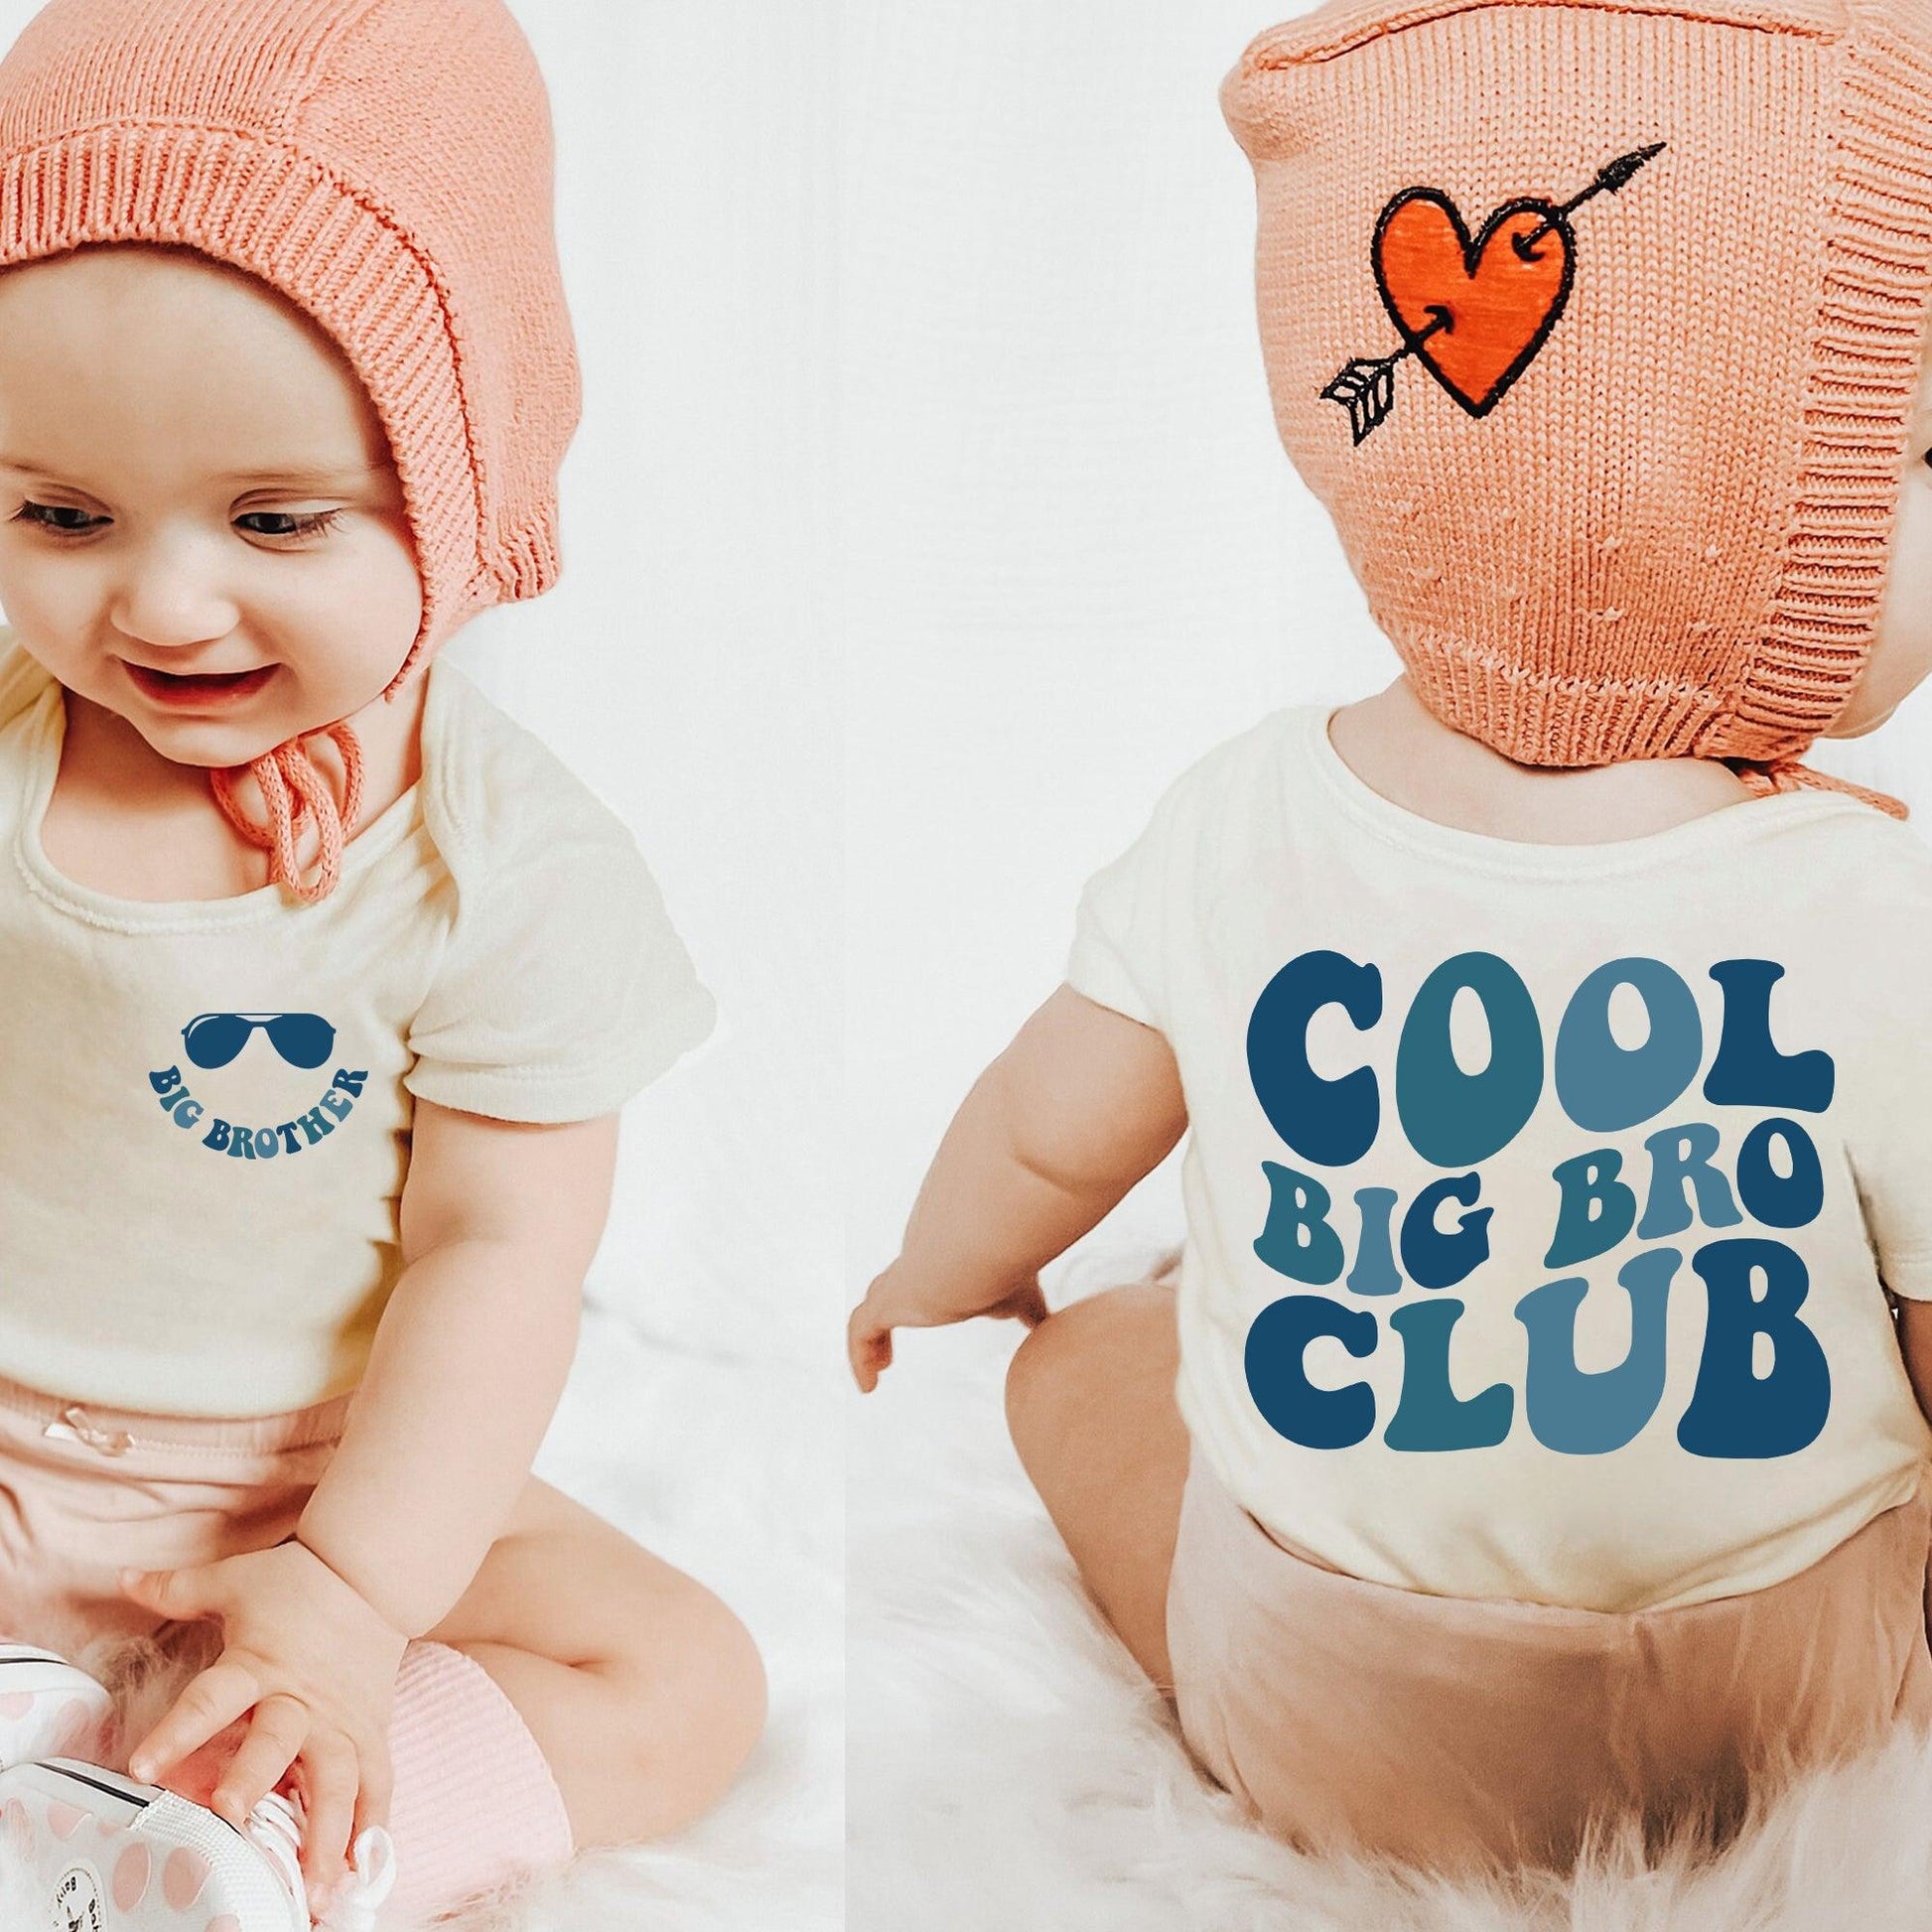 Cooles Big Bro Club Shirt - Süßes Geschwister Kleinkind Outfit - GiftHaus